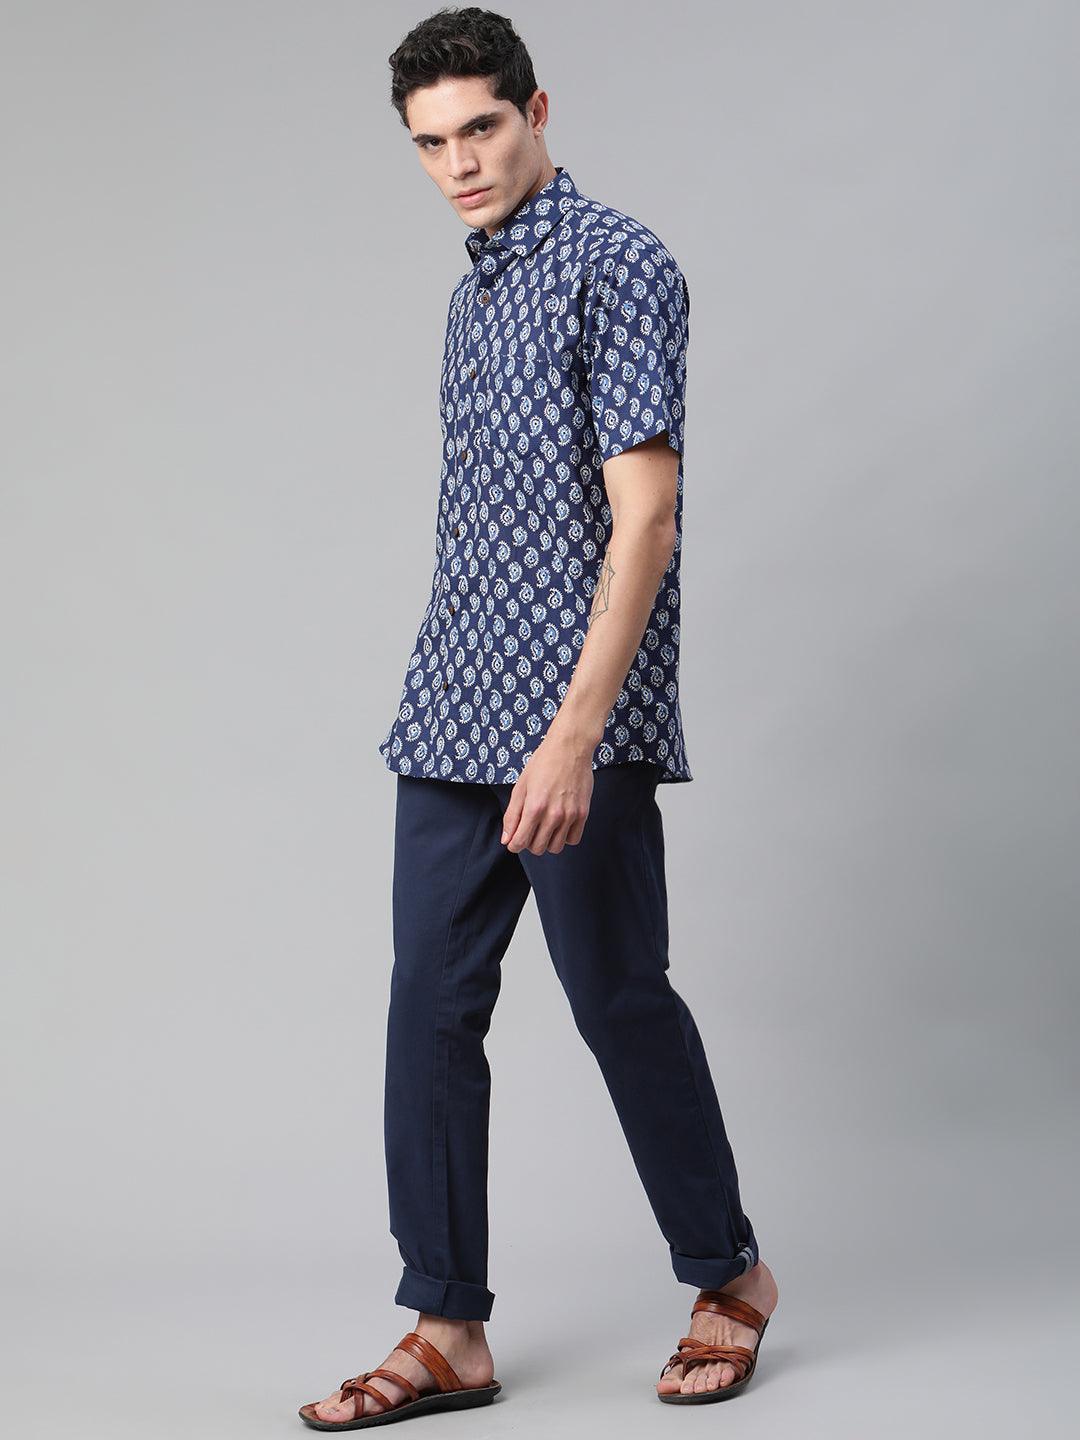 Millennial Men Indigo Blue & White  Cotton  Half Sleeve Shirt for Men-MMH0165 - divenaworld.com